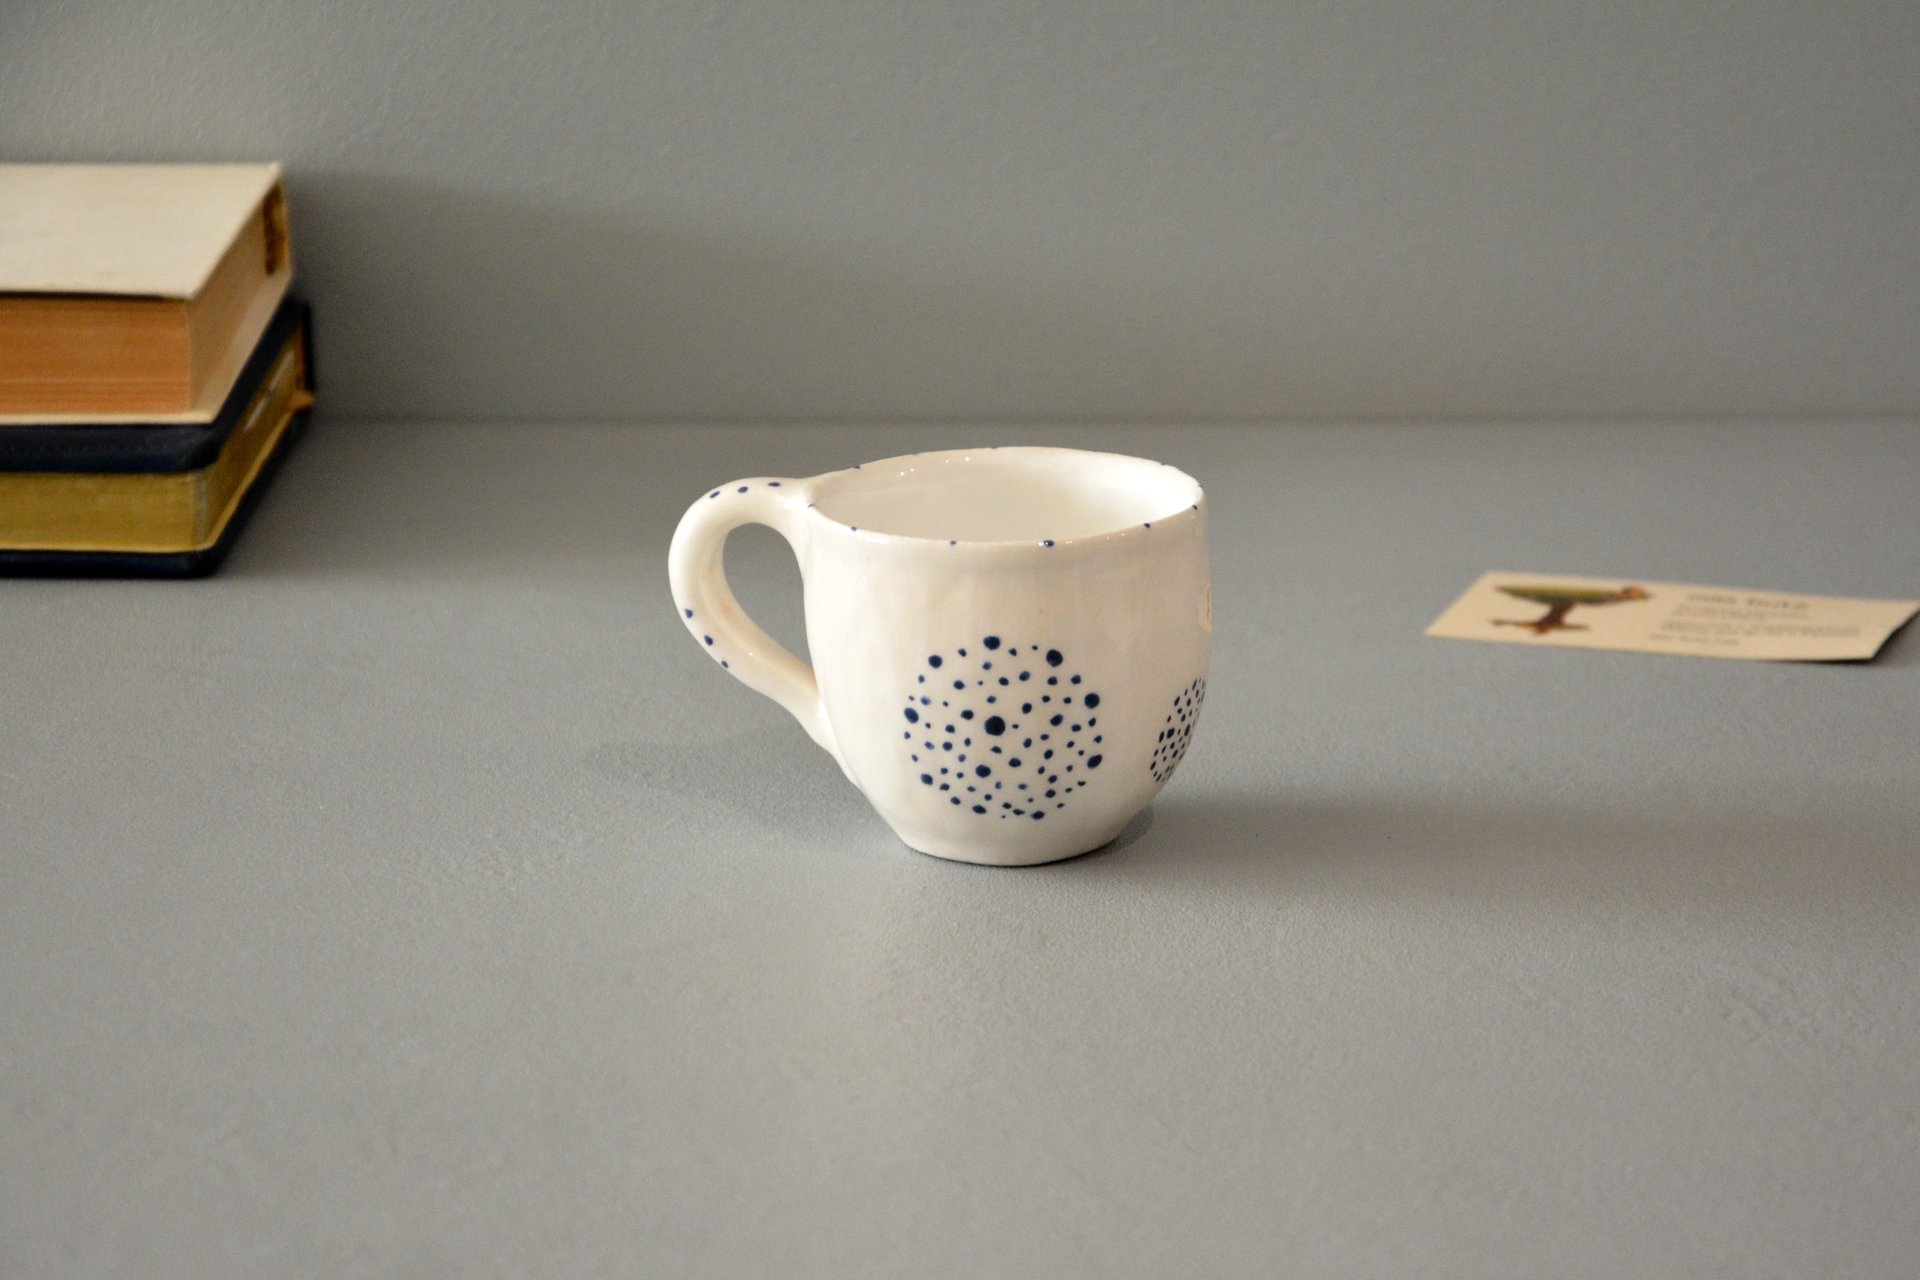 Ceramic white handmade cup for espresso, 150 ml, photo 3 of 4.